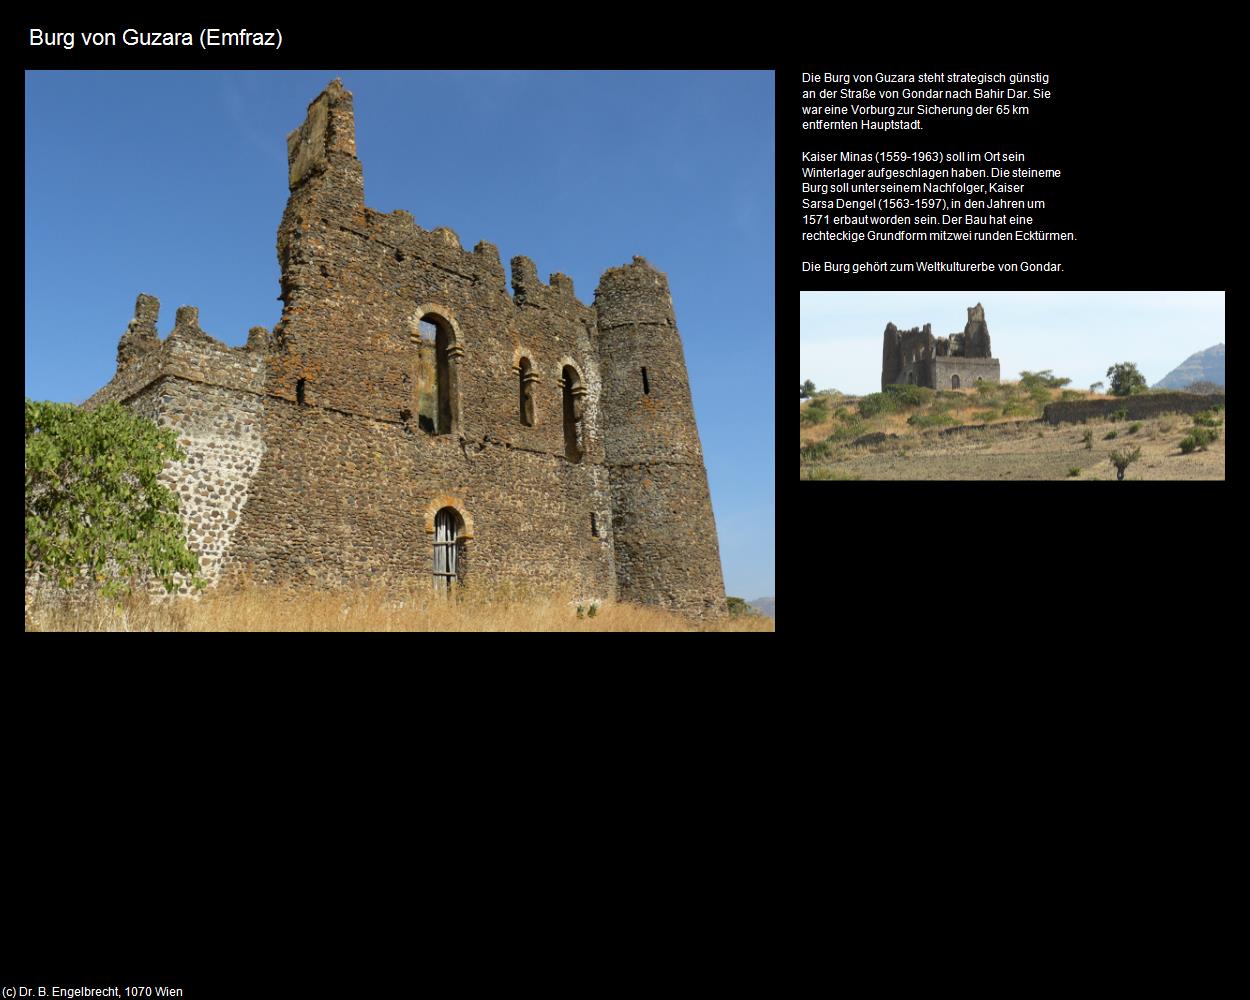 Guzara-Burg (Emfraz) (Route Bahir Dar-Gondar) in Äthiopien